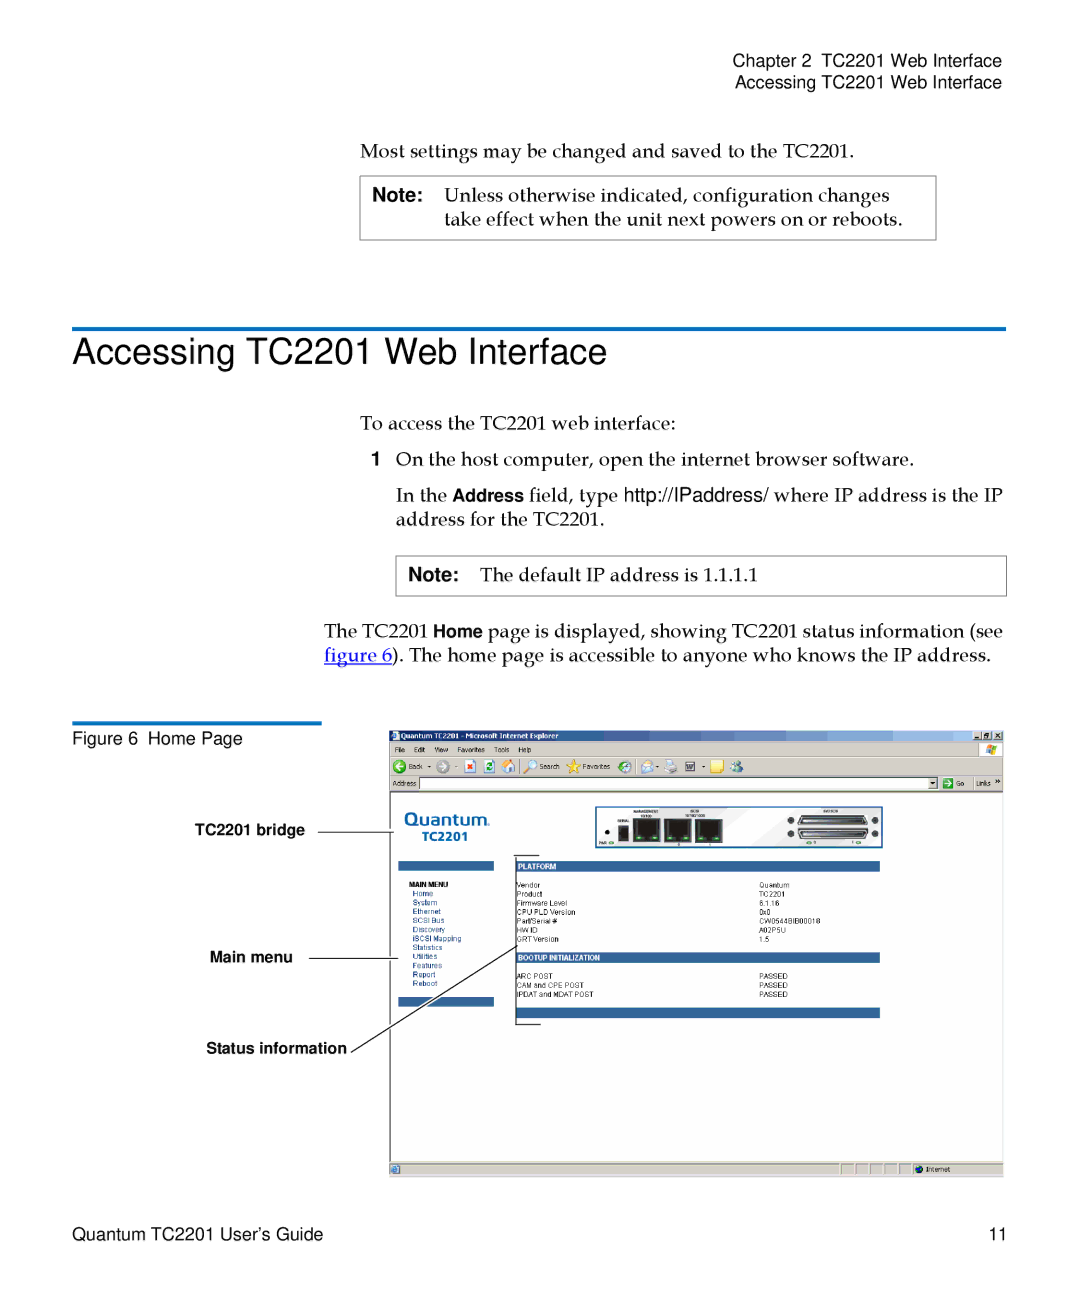 Quantum manual Accessing TC2201 Web Interface, Home 